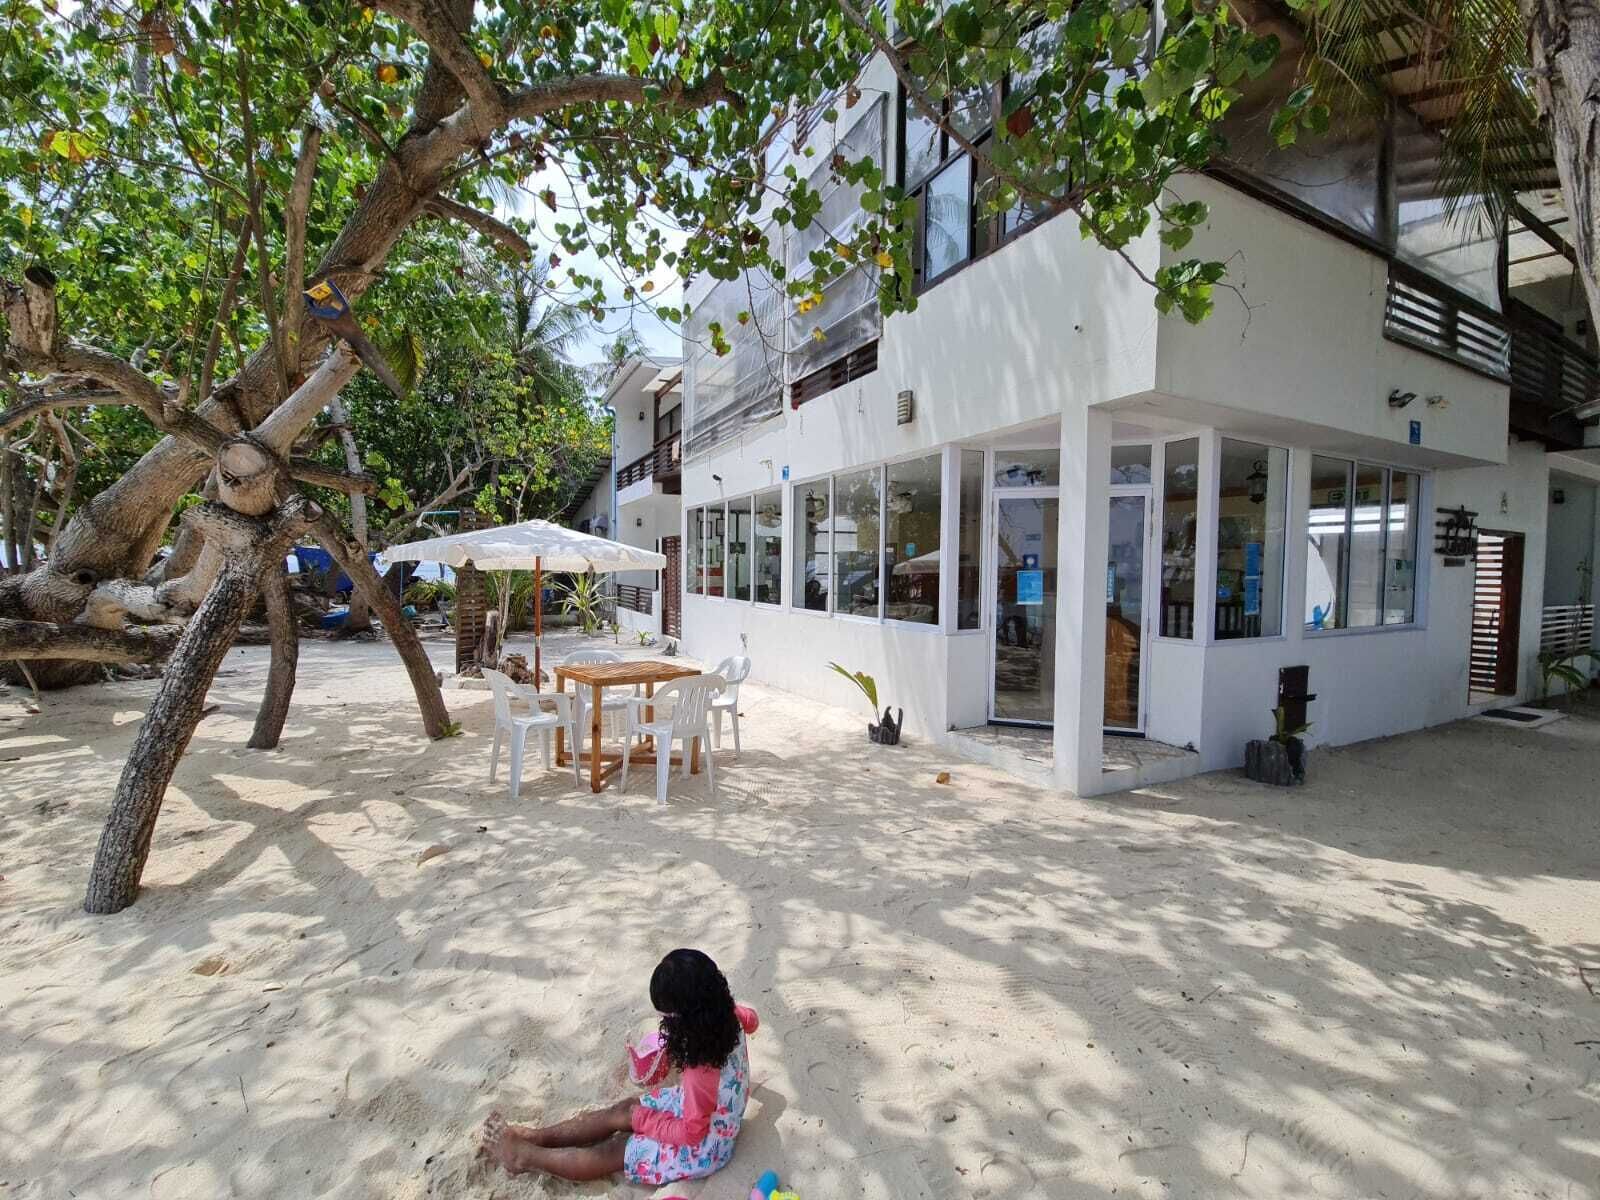 Liberty Guest House Maldives